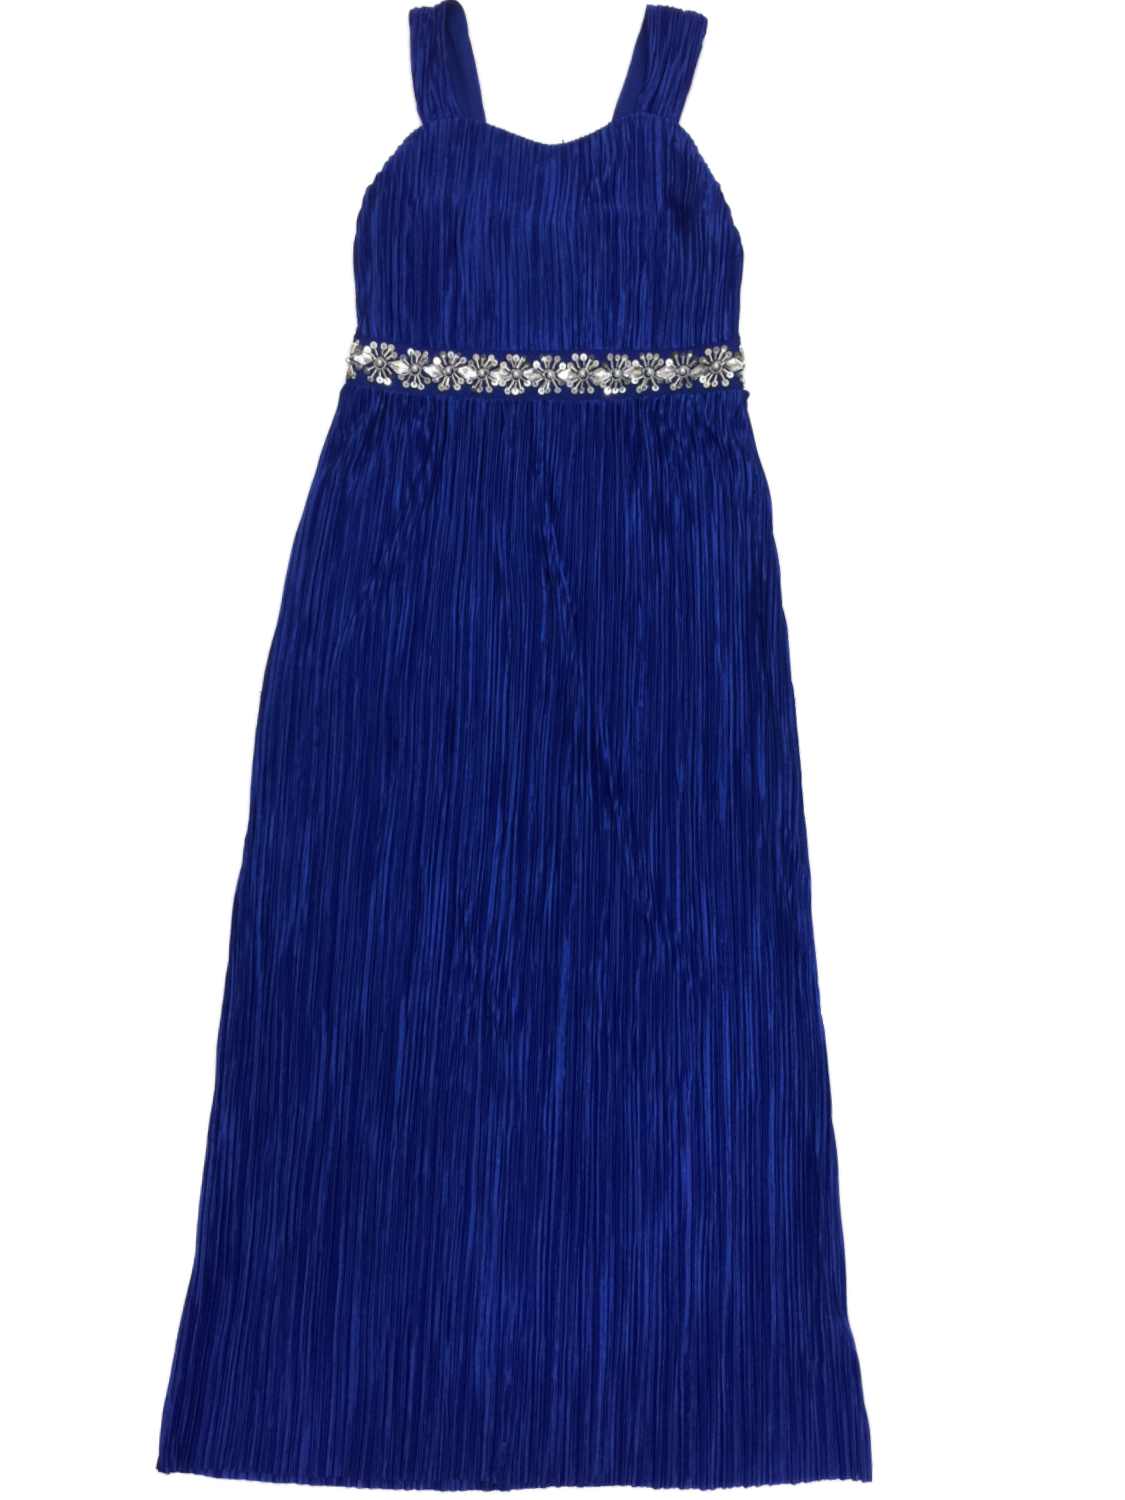 Amy's Closet Girls Blue Sequin Star Embellished Waist Formal Party Flower Girl Dress